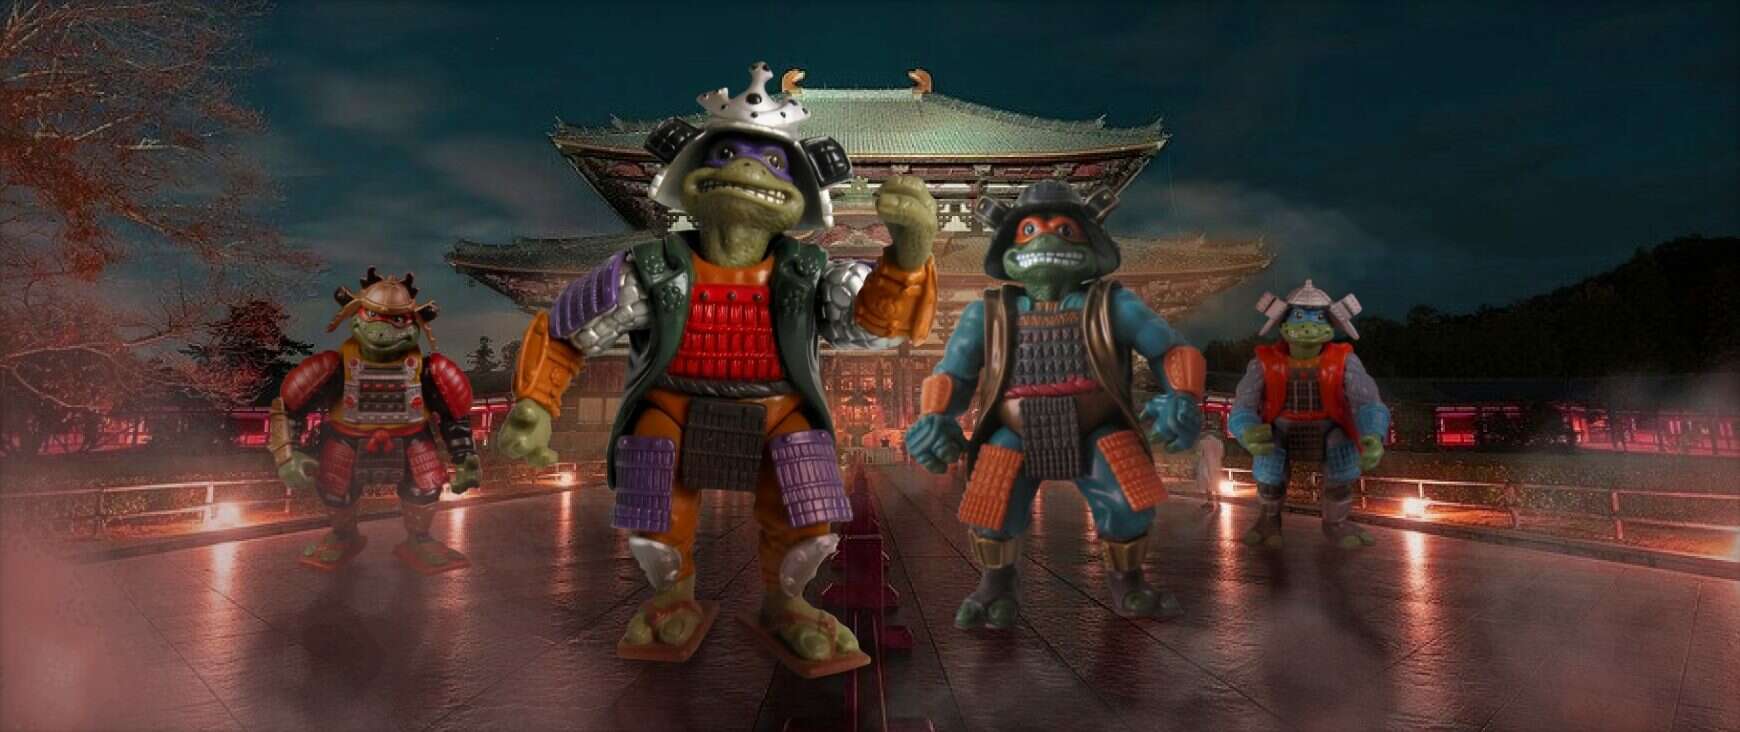 Samurai Turtles action figures from Movie III